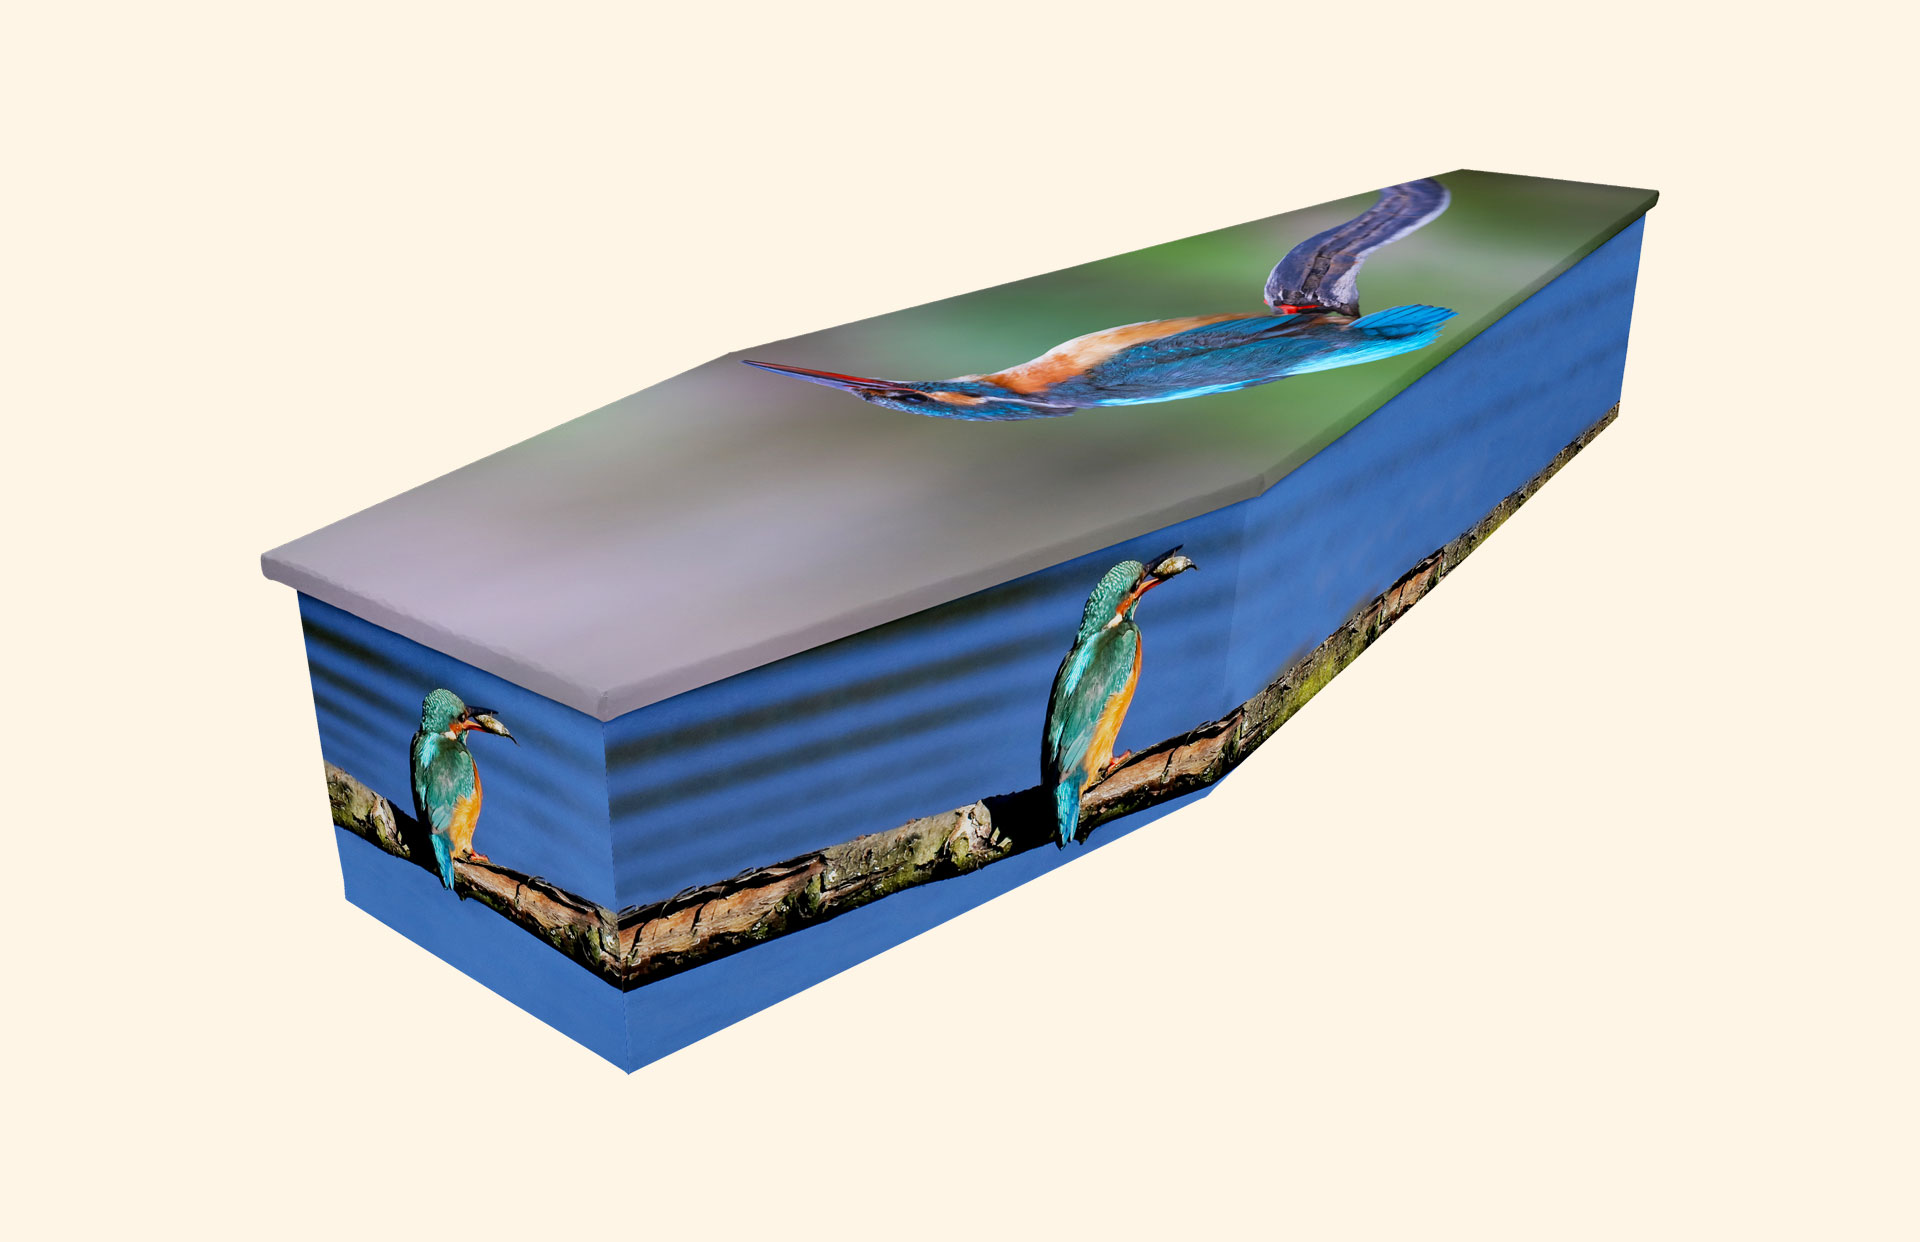 Kingfisher design on a cardboard coffin